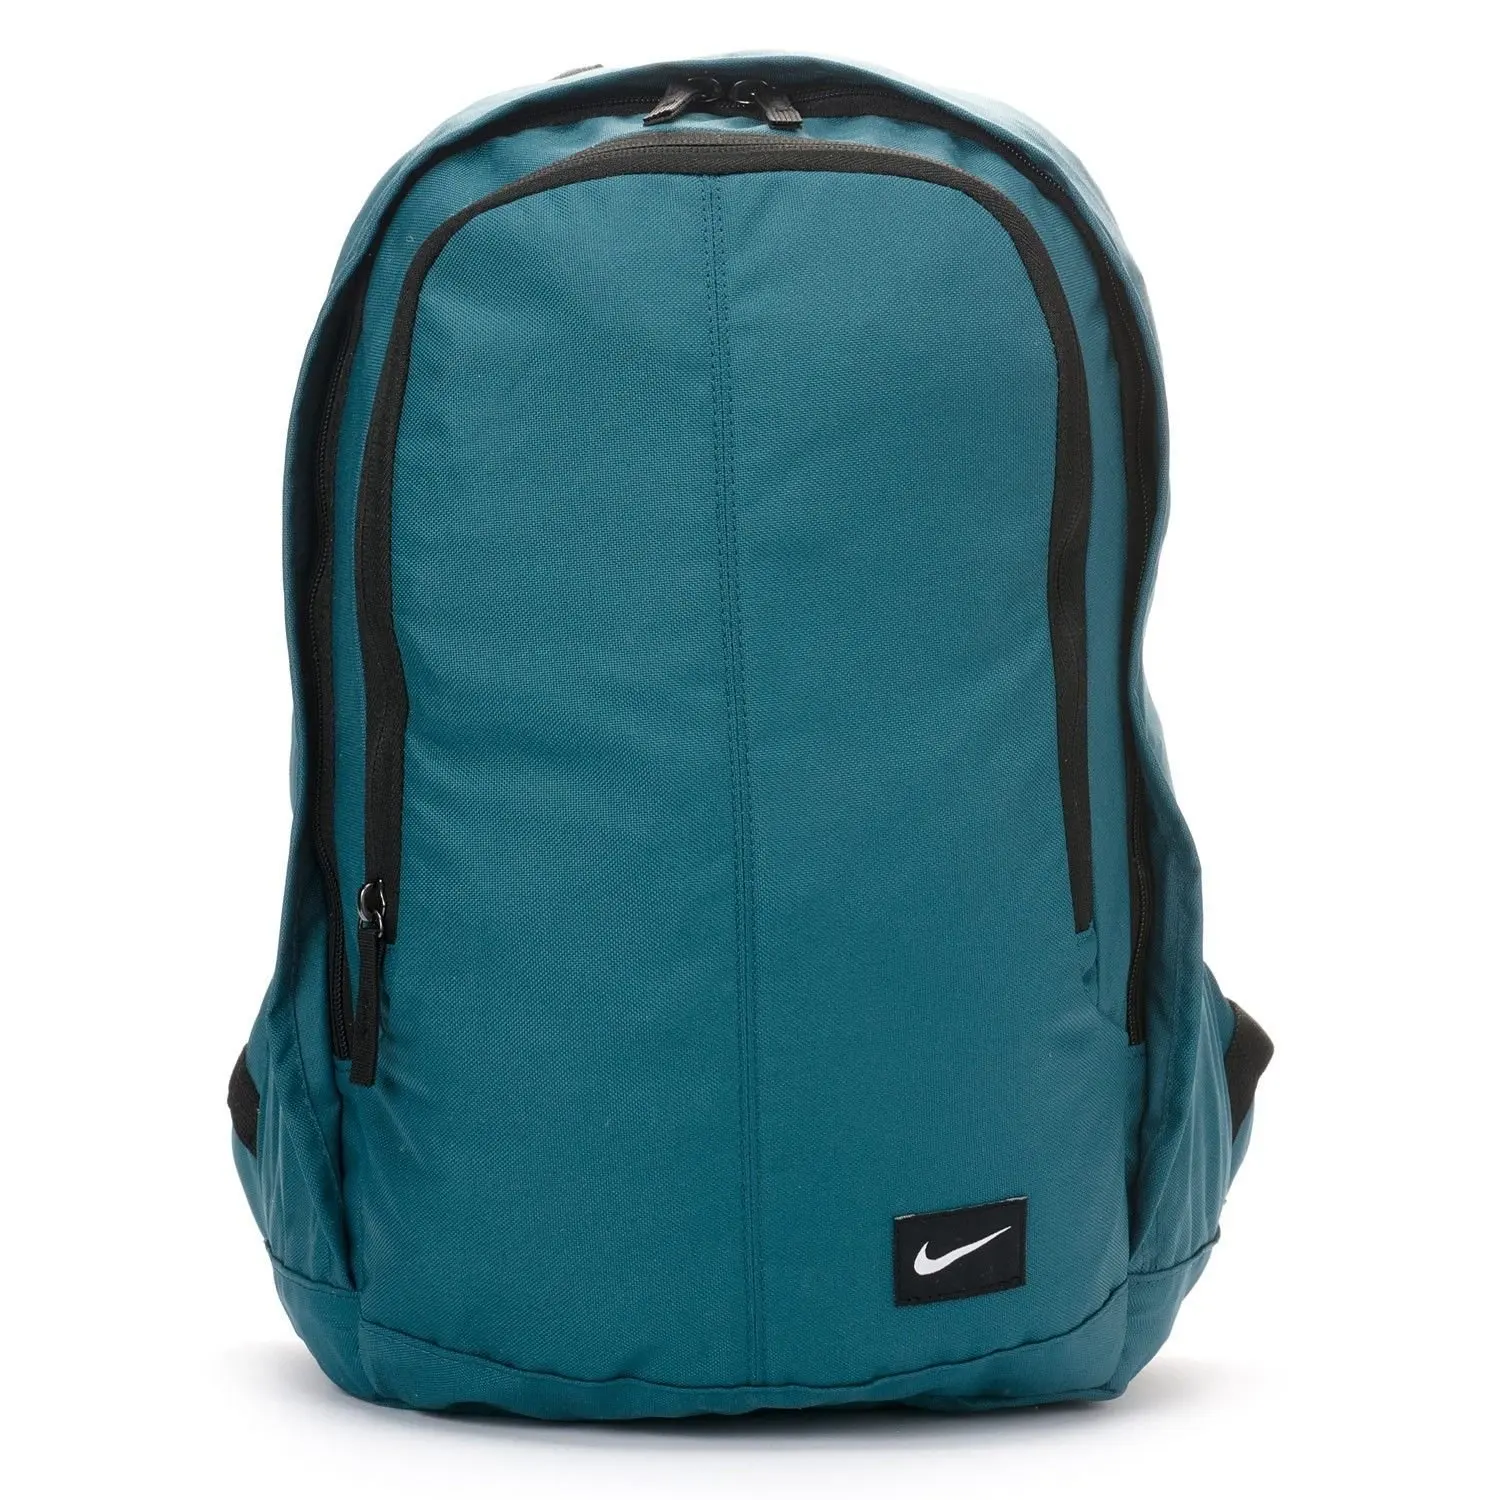 Buy Brand New Nike Male 26 Liters Backpack Bookbag in Black-White ...